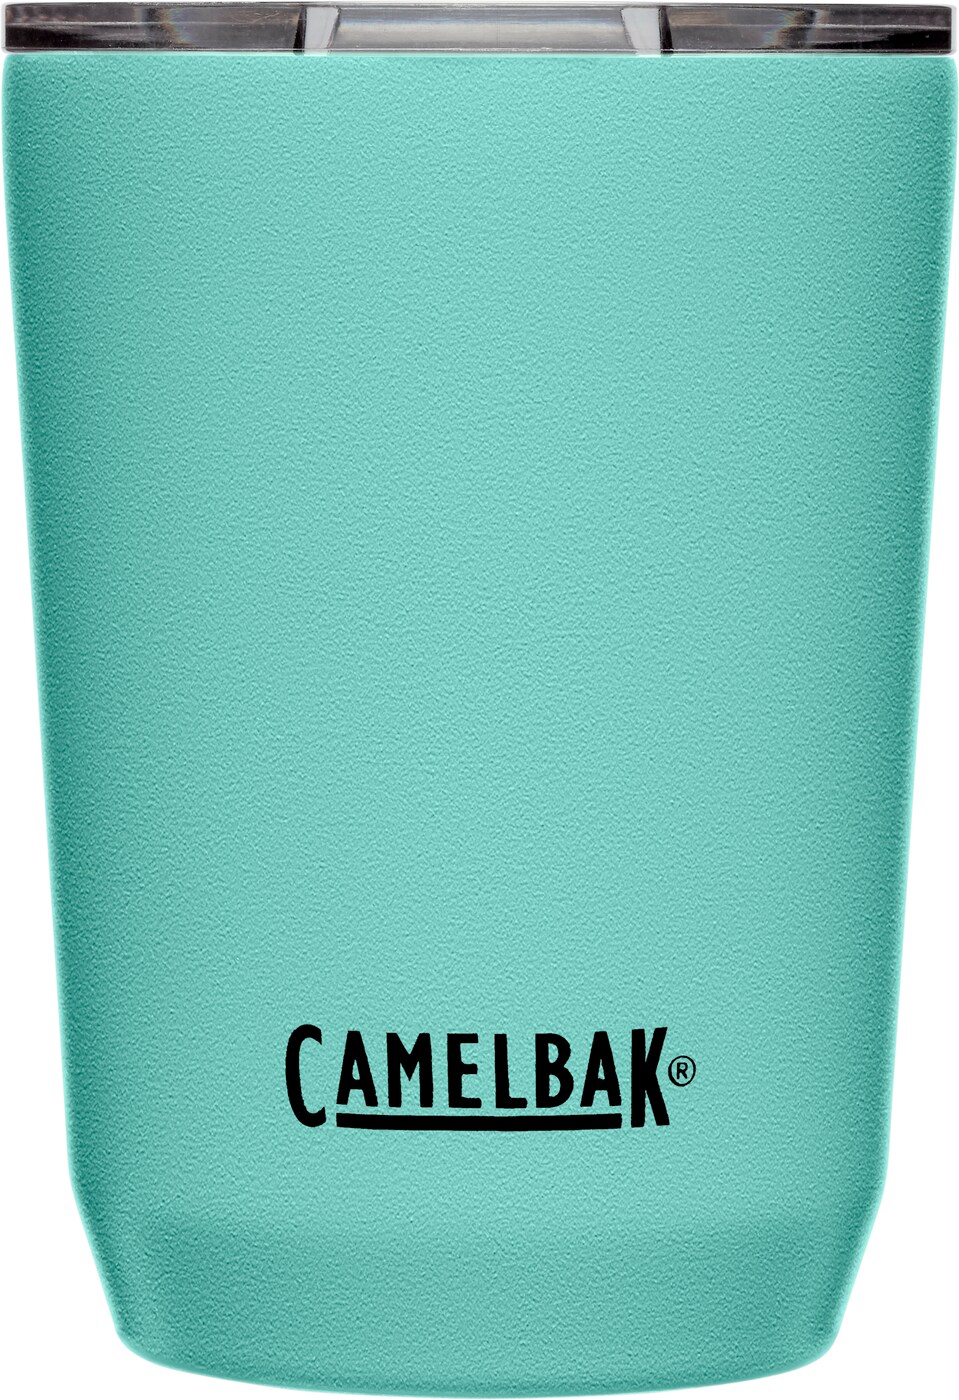 Camelbak Tumbler